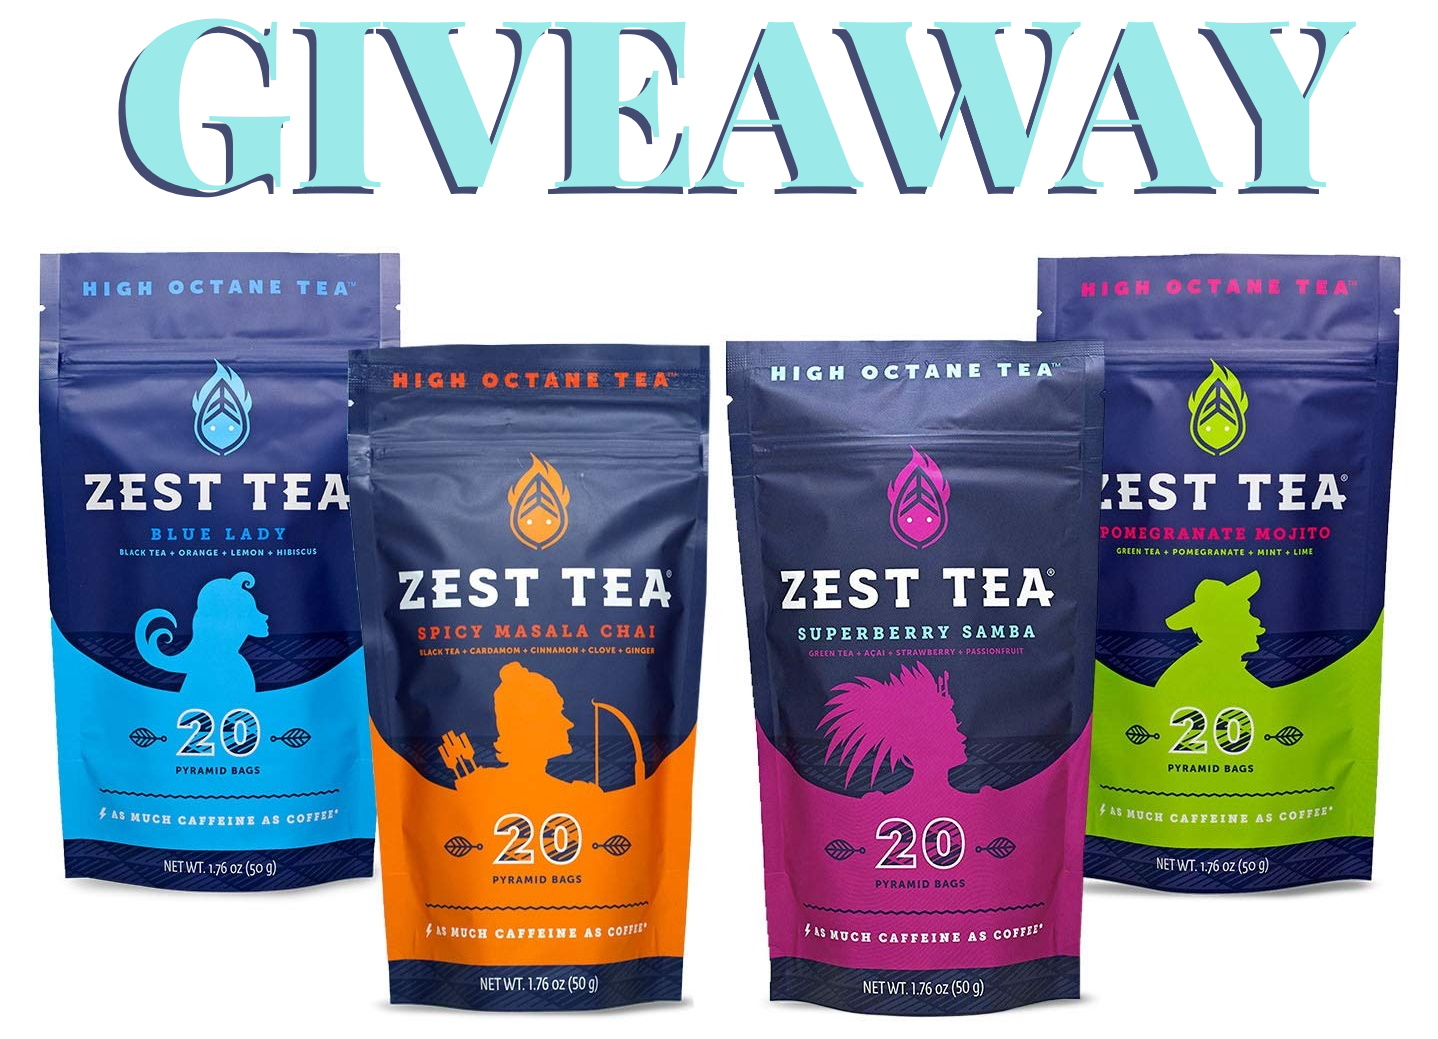 Zest Tea Energy Hot Tea Variety Pack featured